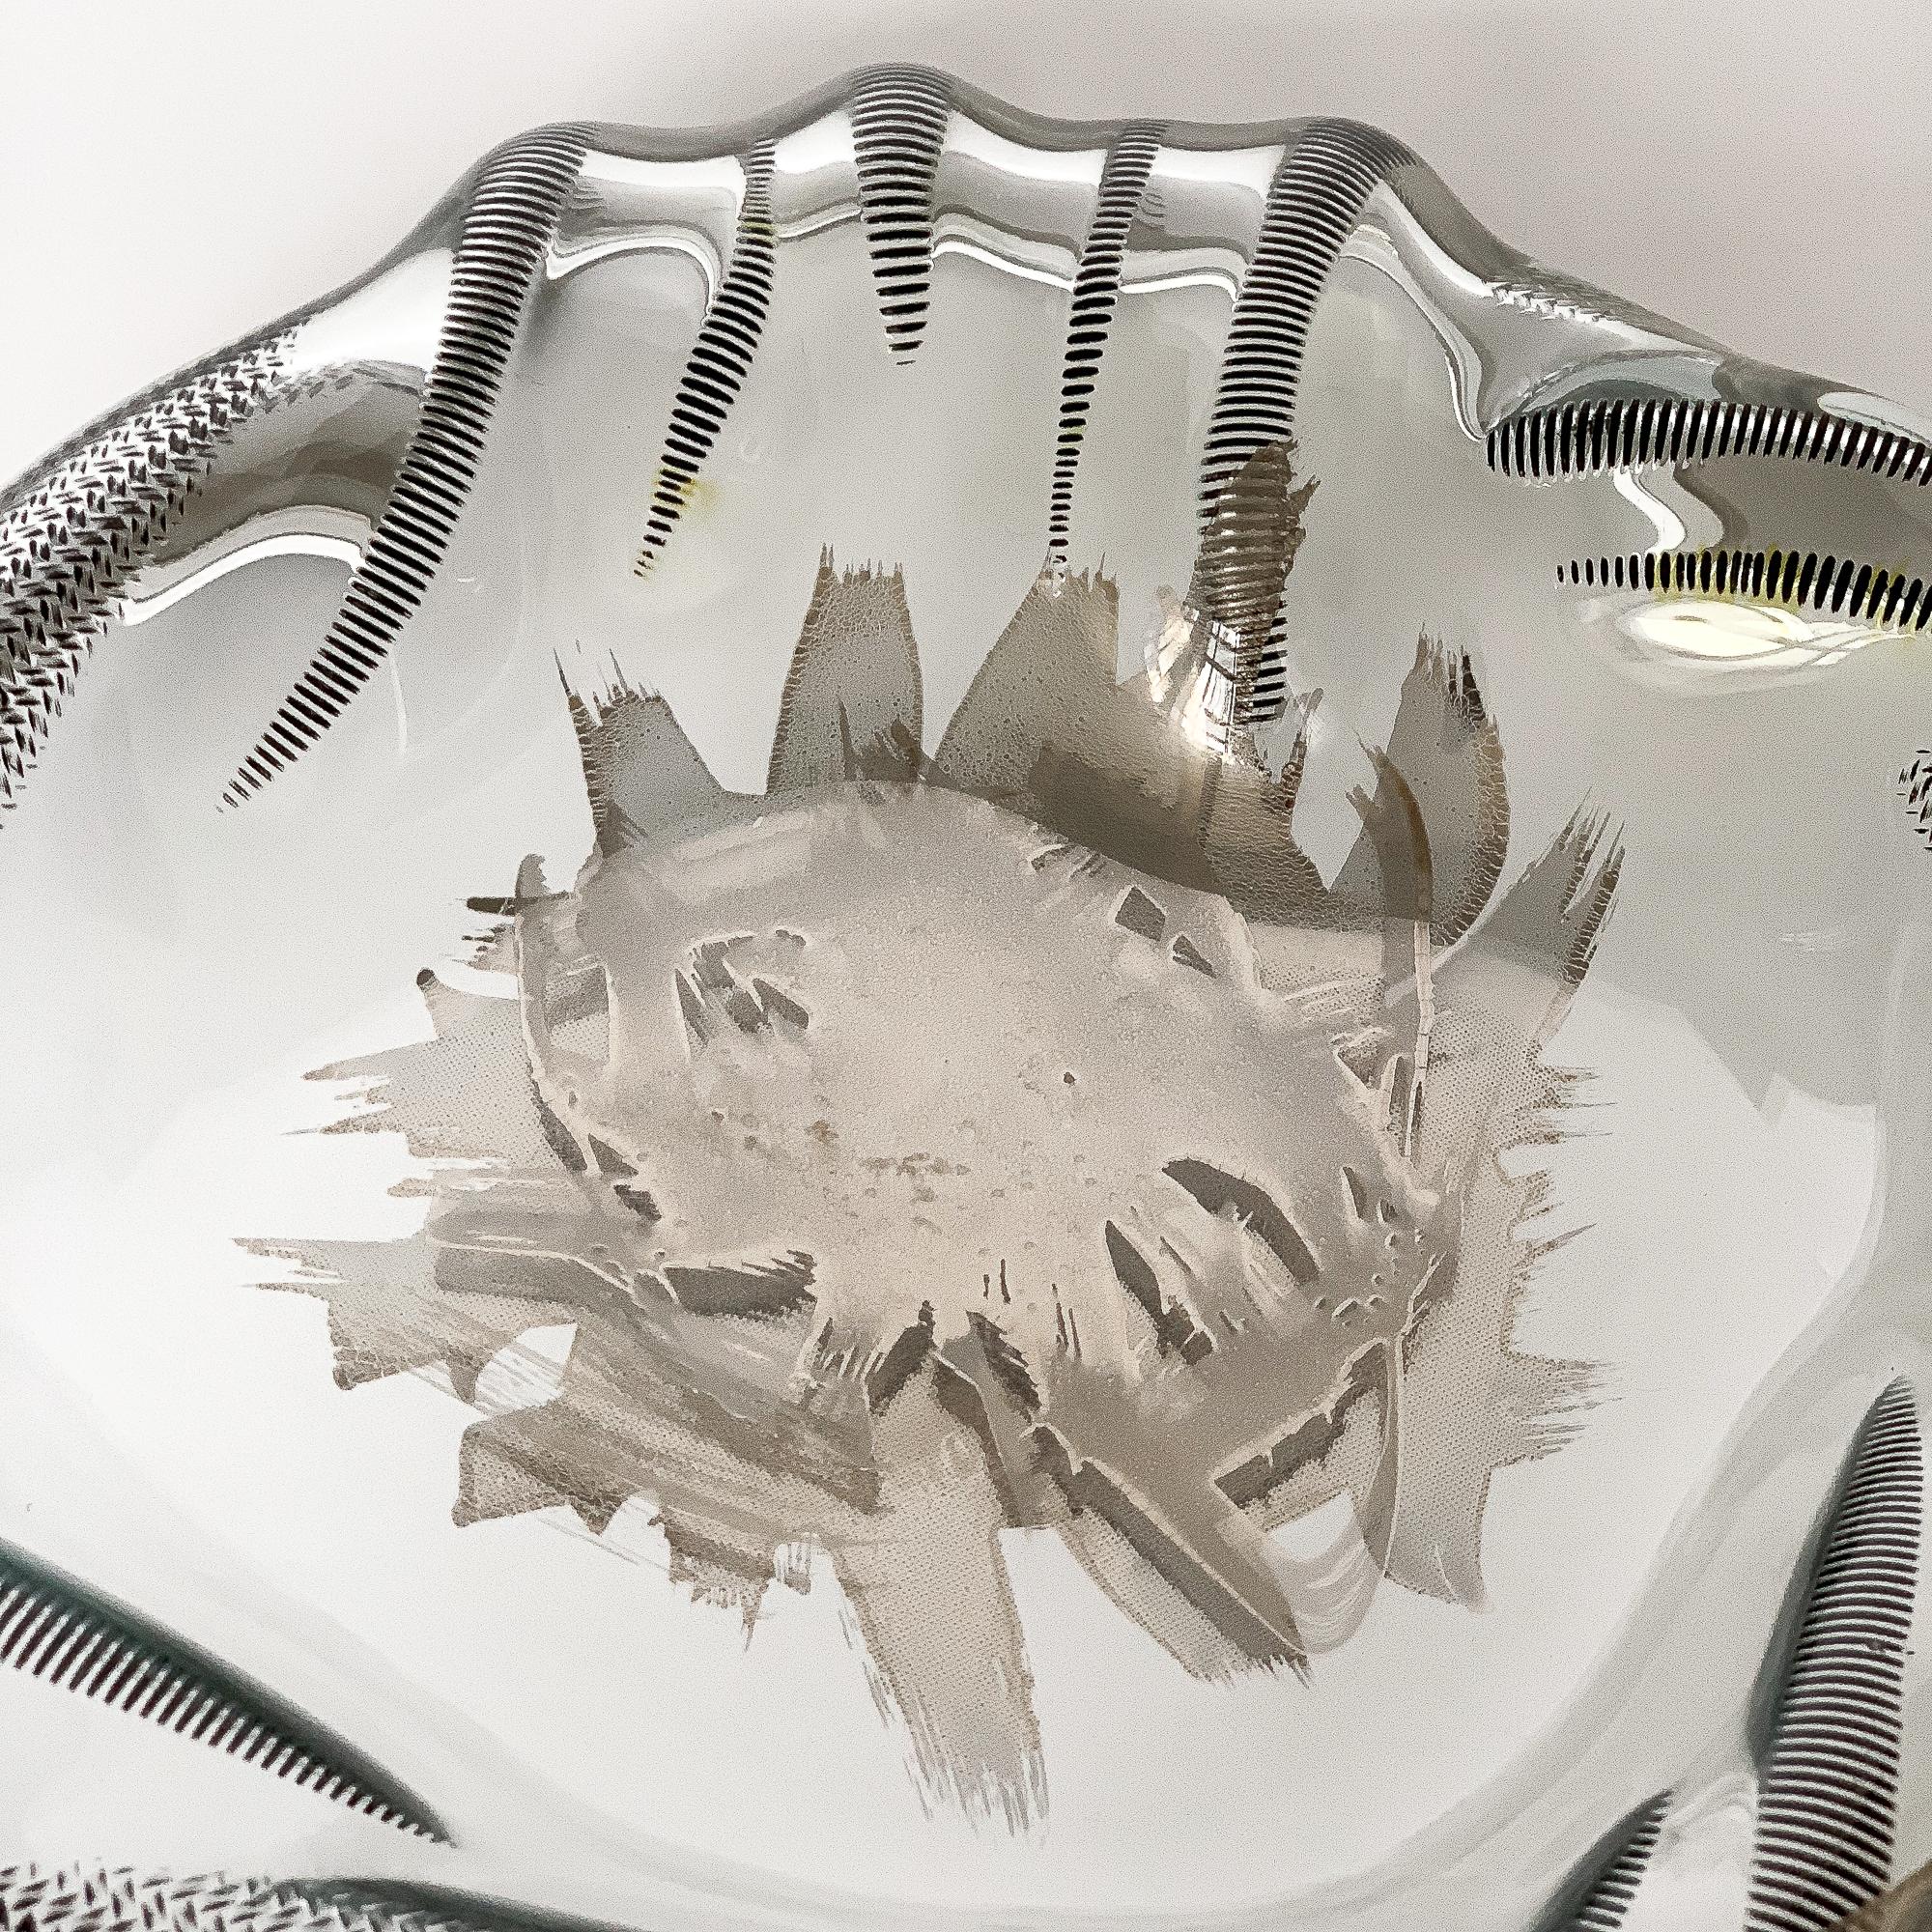 American Unique Sculptural Art Glass Low Bowl with Silver Details